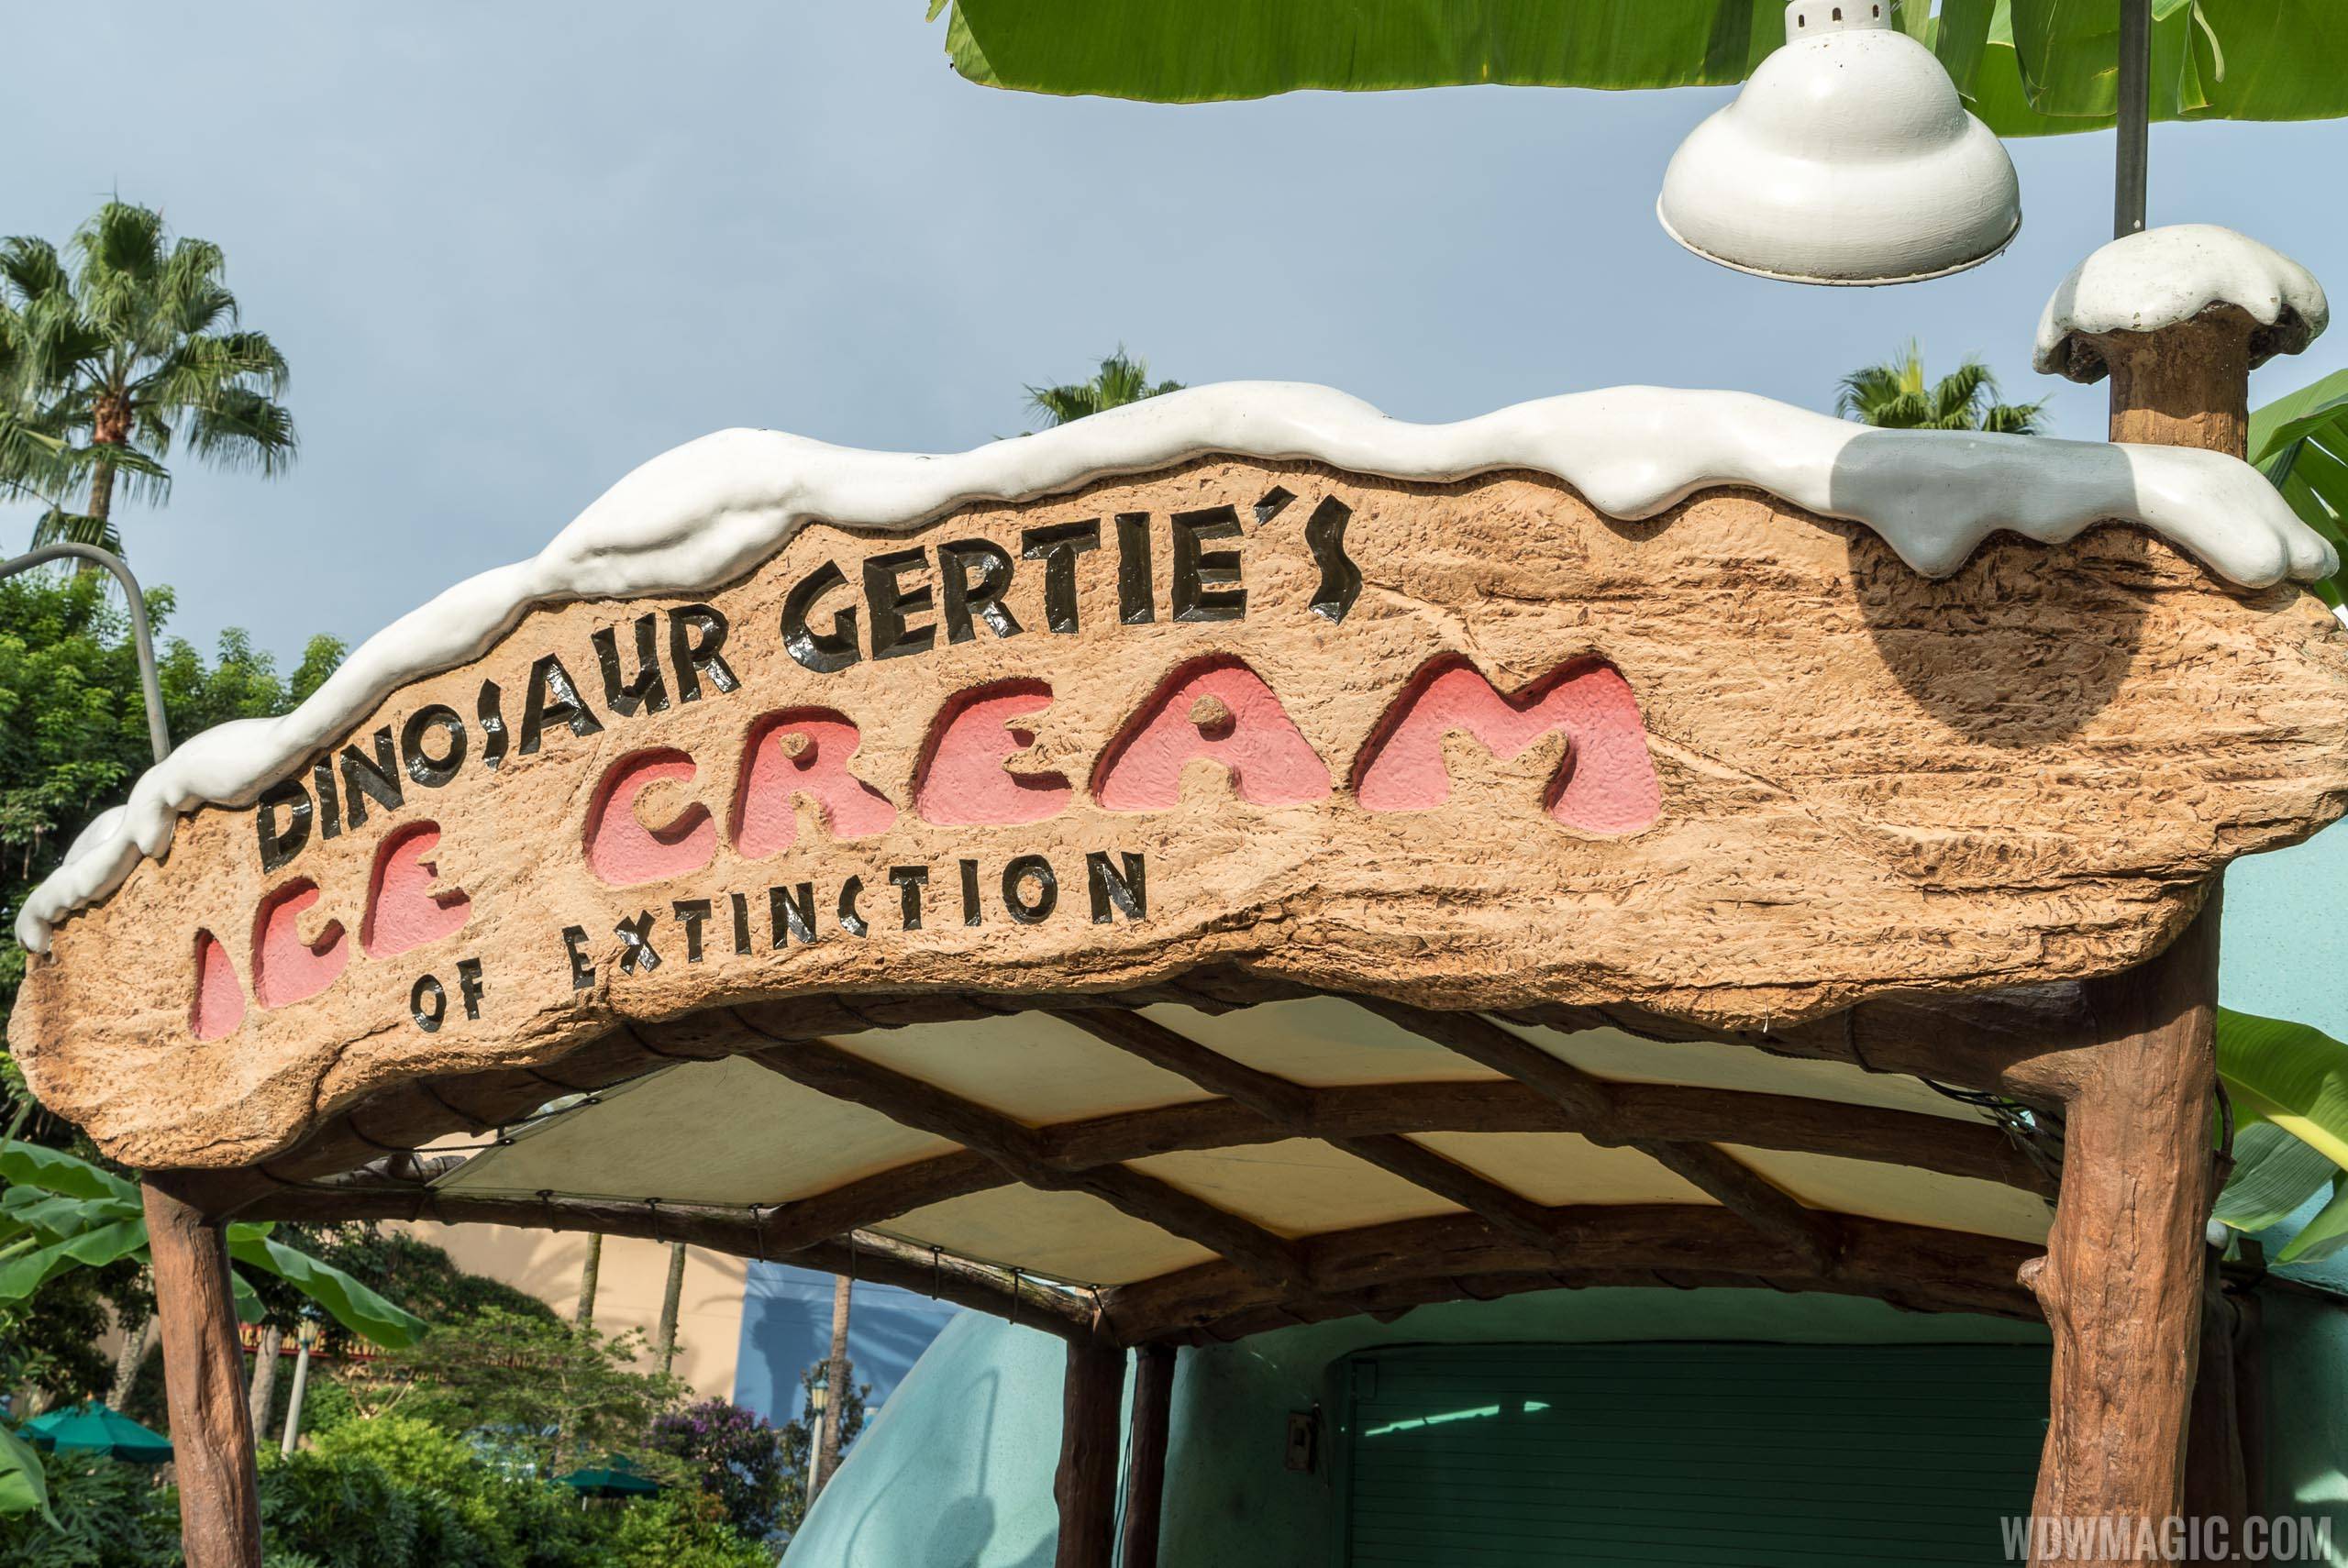 Dinosaur Gerties Ice Cream of Extinction overview